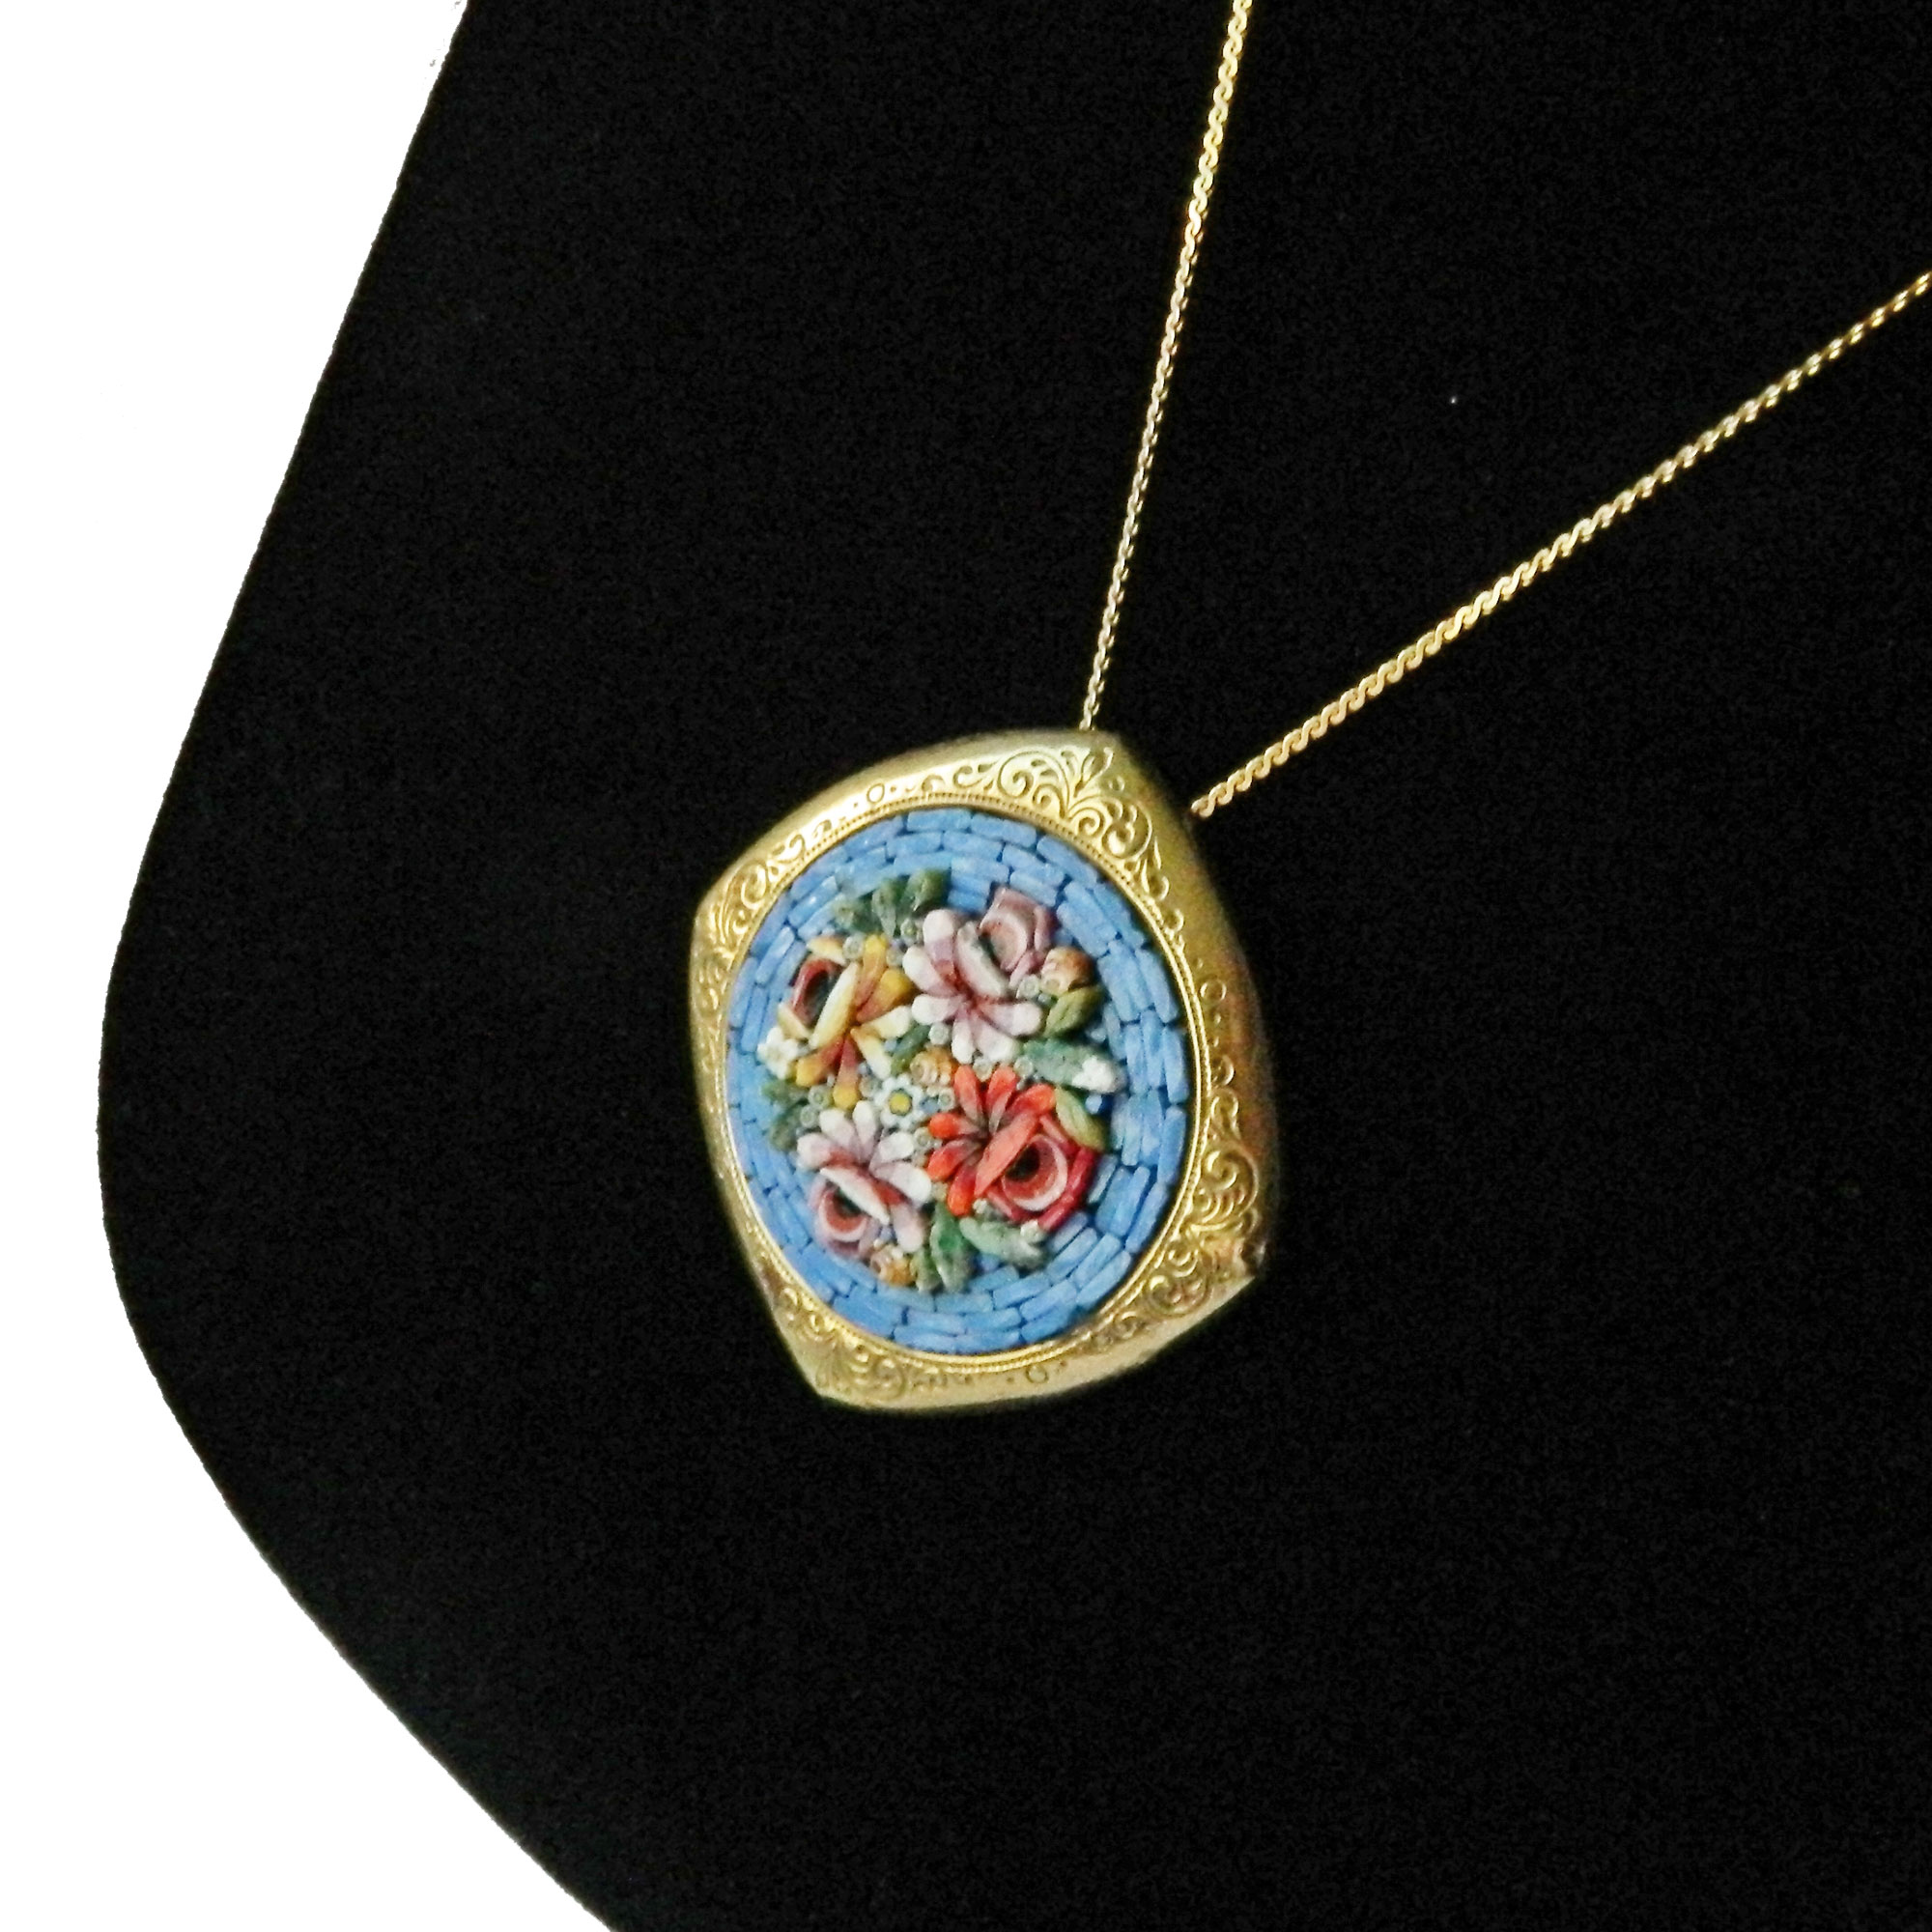 Micro mosaic pendant necklace